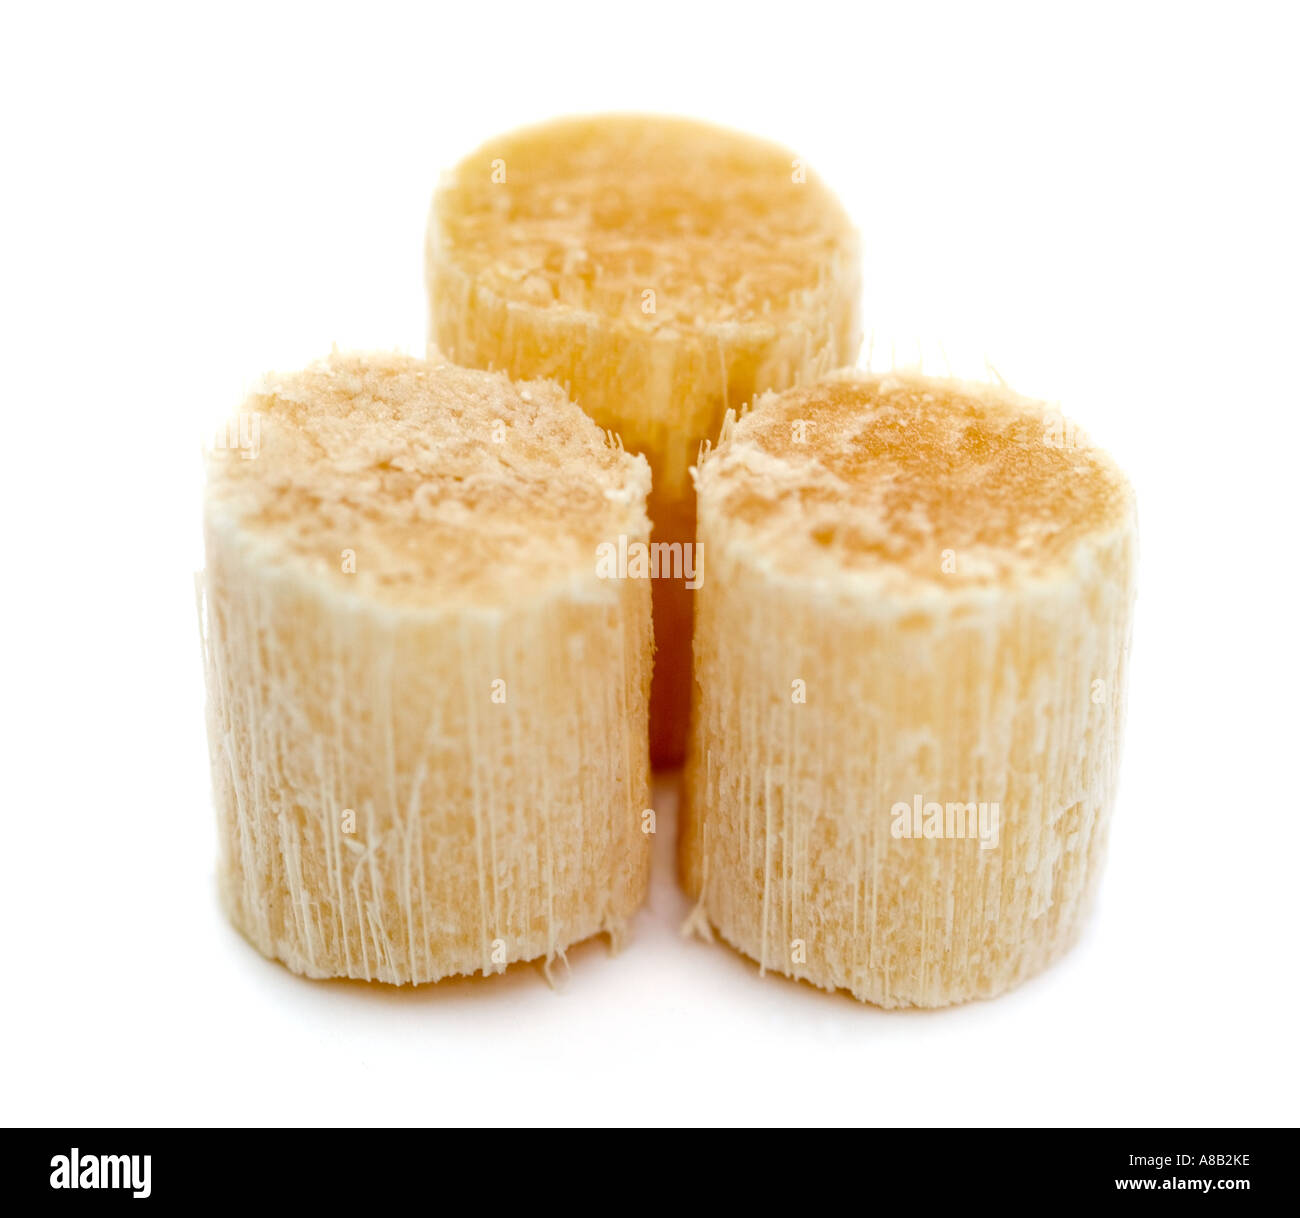 Cut stem of raw sugarcane shot against a white background Stock Photo